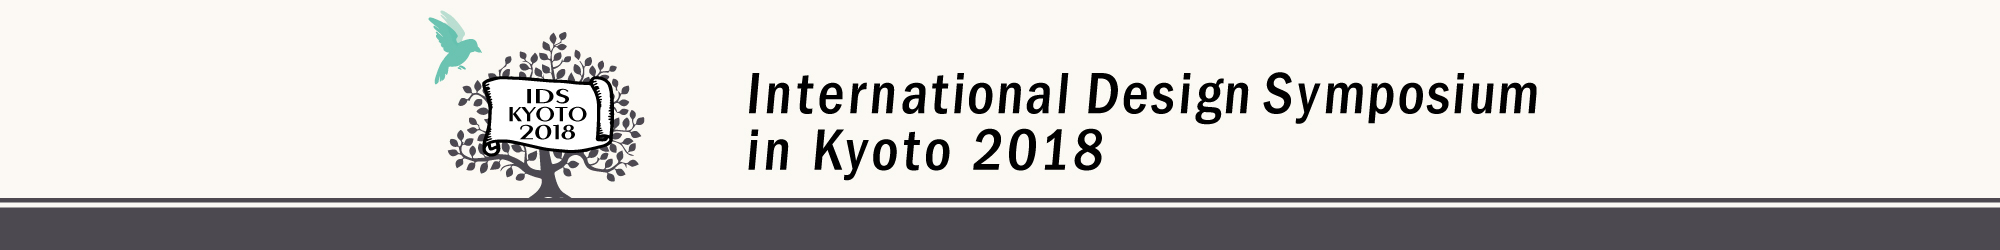 International Design Symposium in Kyoto 2018 [ IDS Kyoto 2018 ]